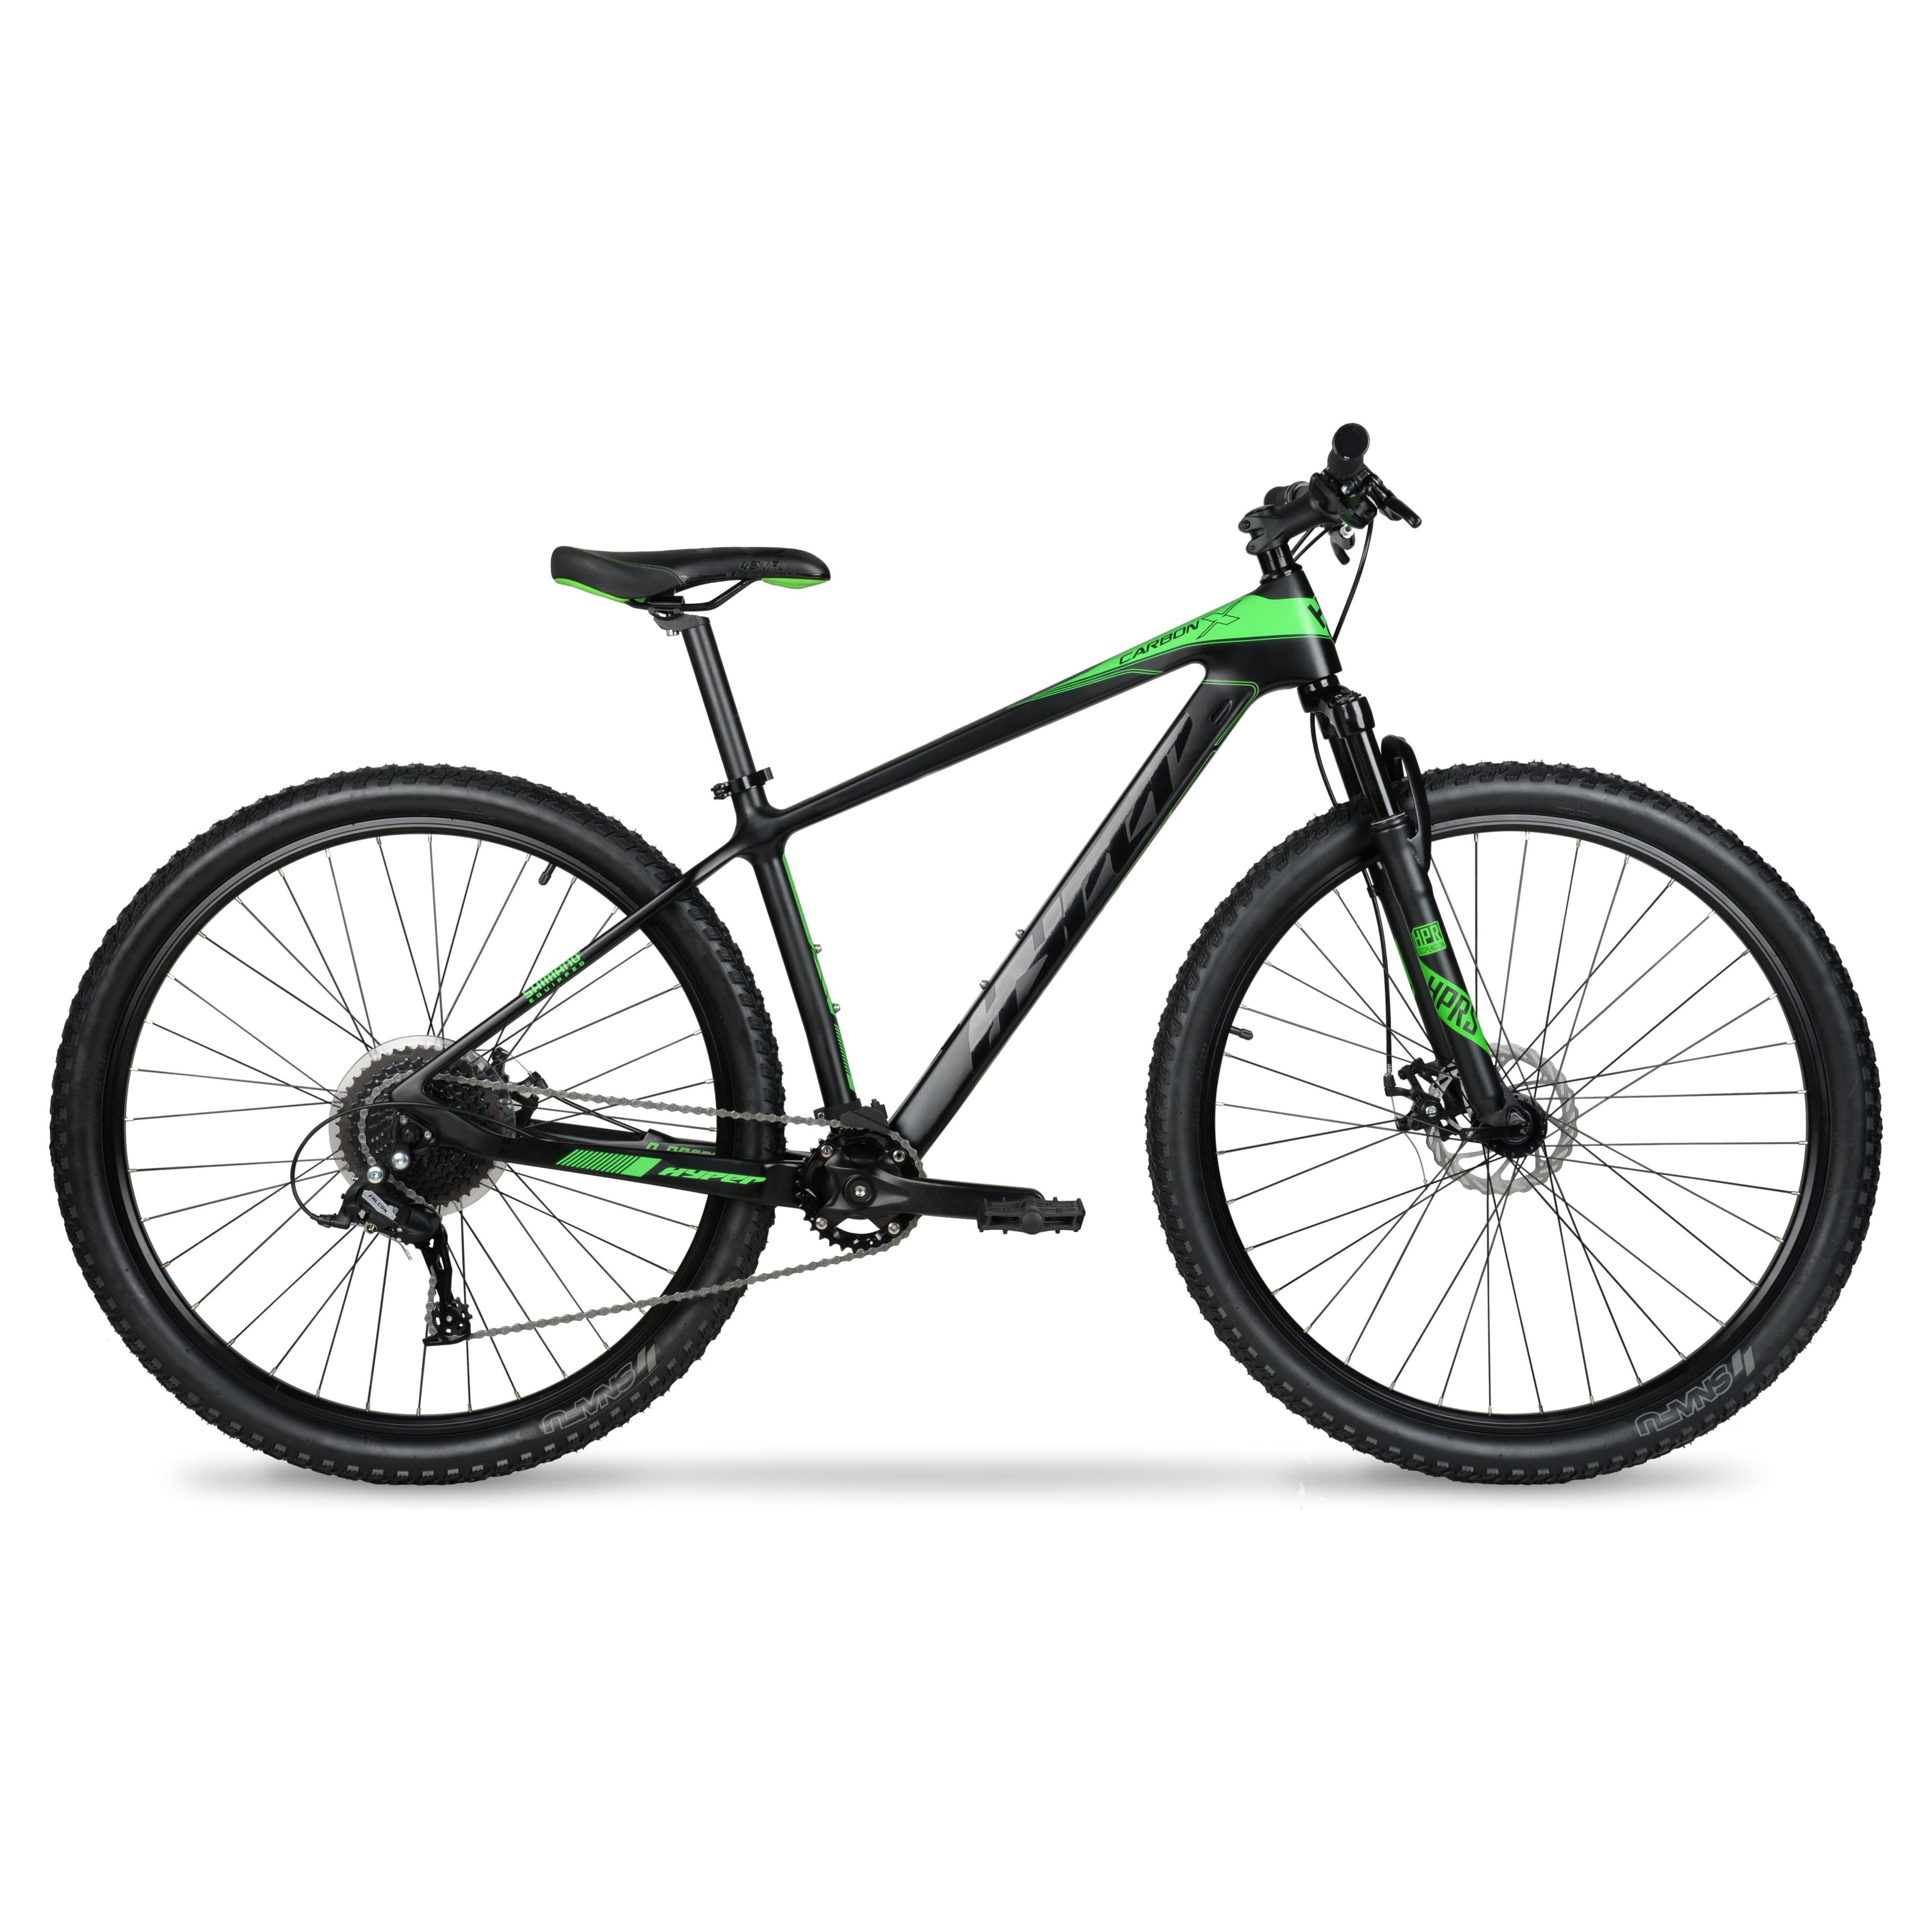 Hyper 29 Carbon Fiber Men's Mountain Bike, Black/Green 